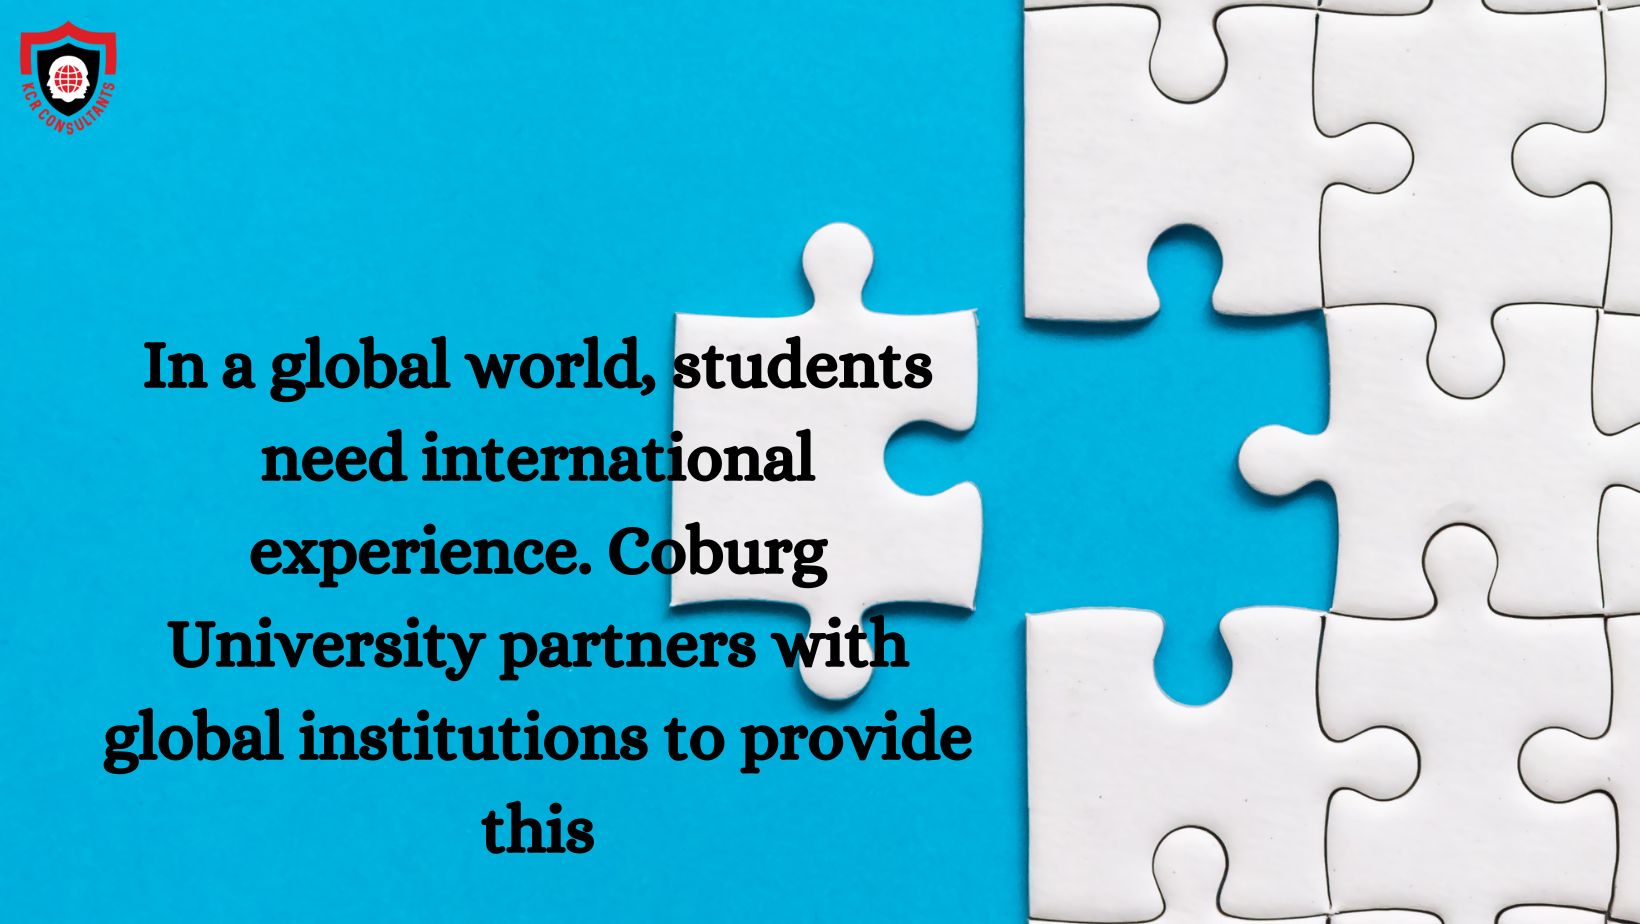 Coburg University of Applied Sciences and Arts - KCR CONSULTANTS - International Partnership